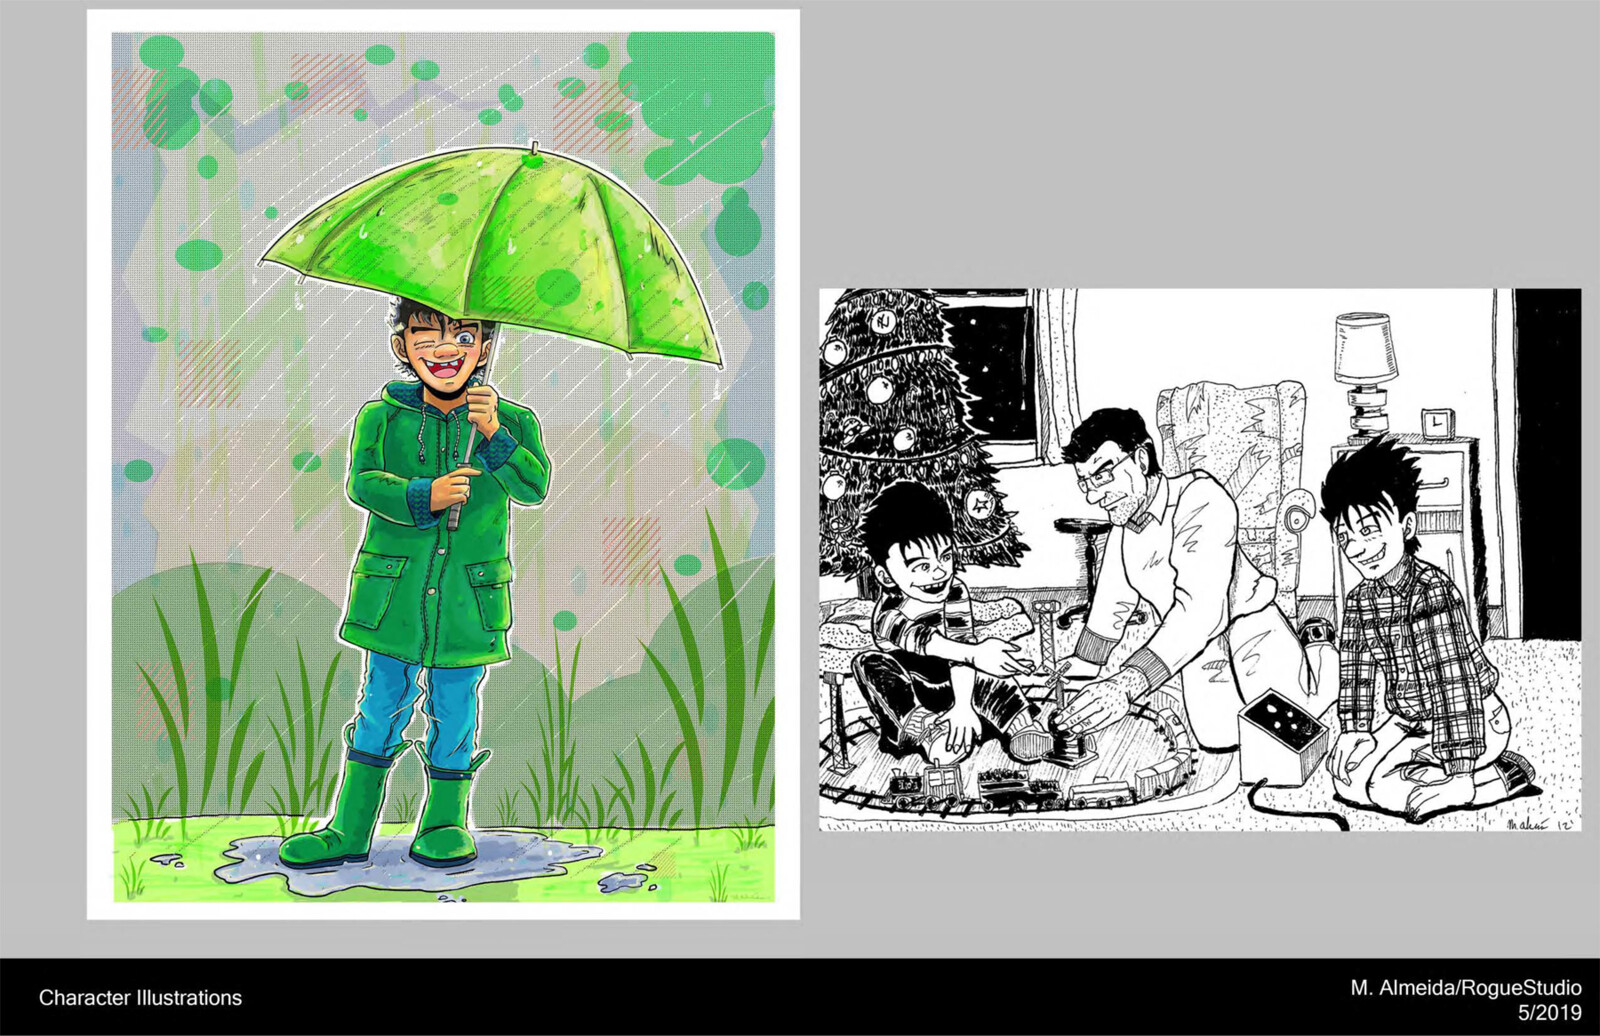 Character illustrations.
Medium- Photoshop (Left), Ink (right)